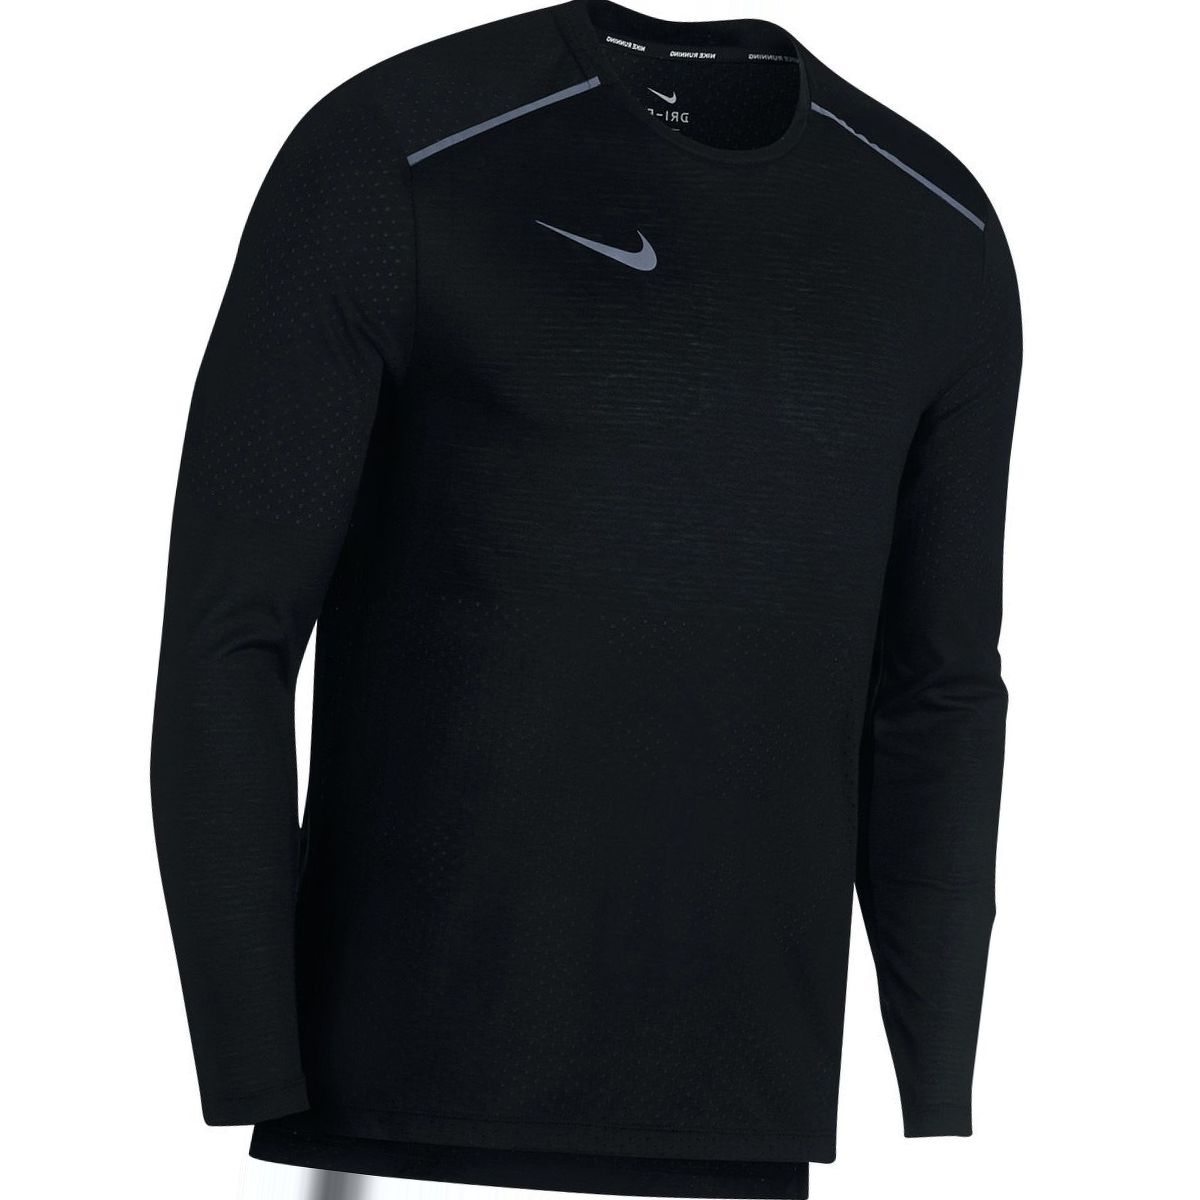 Nike Breathe Rise 365 Long-Sleeve Shirt - Men's